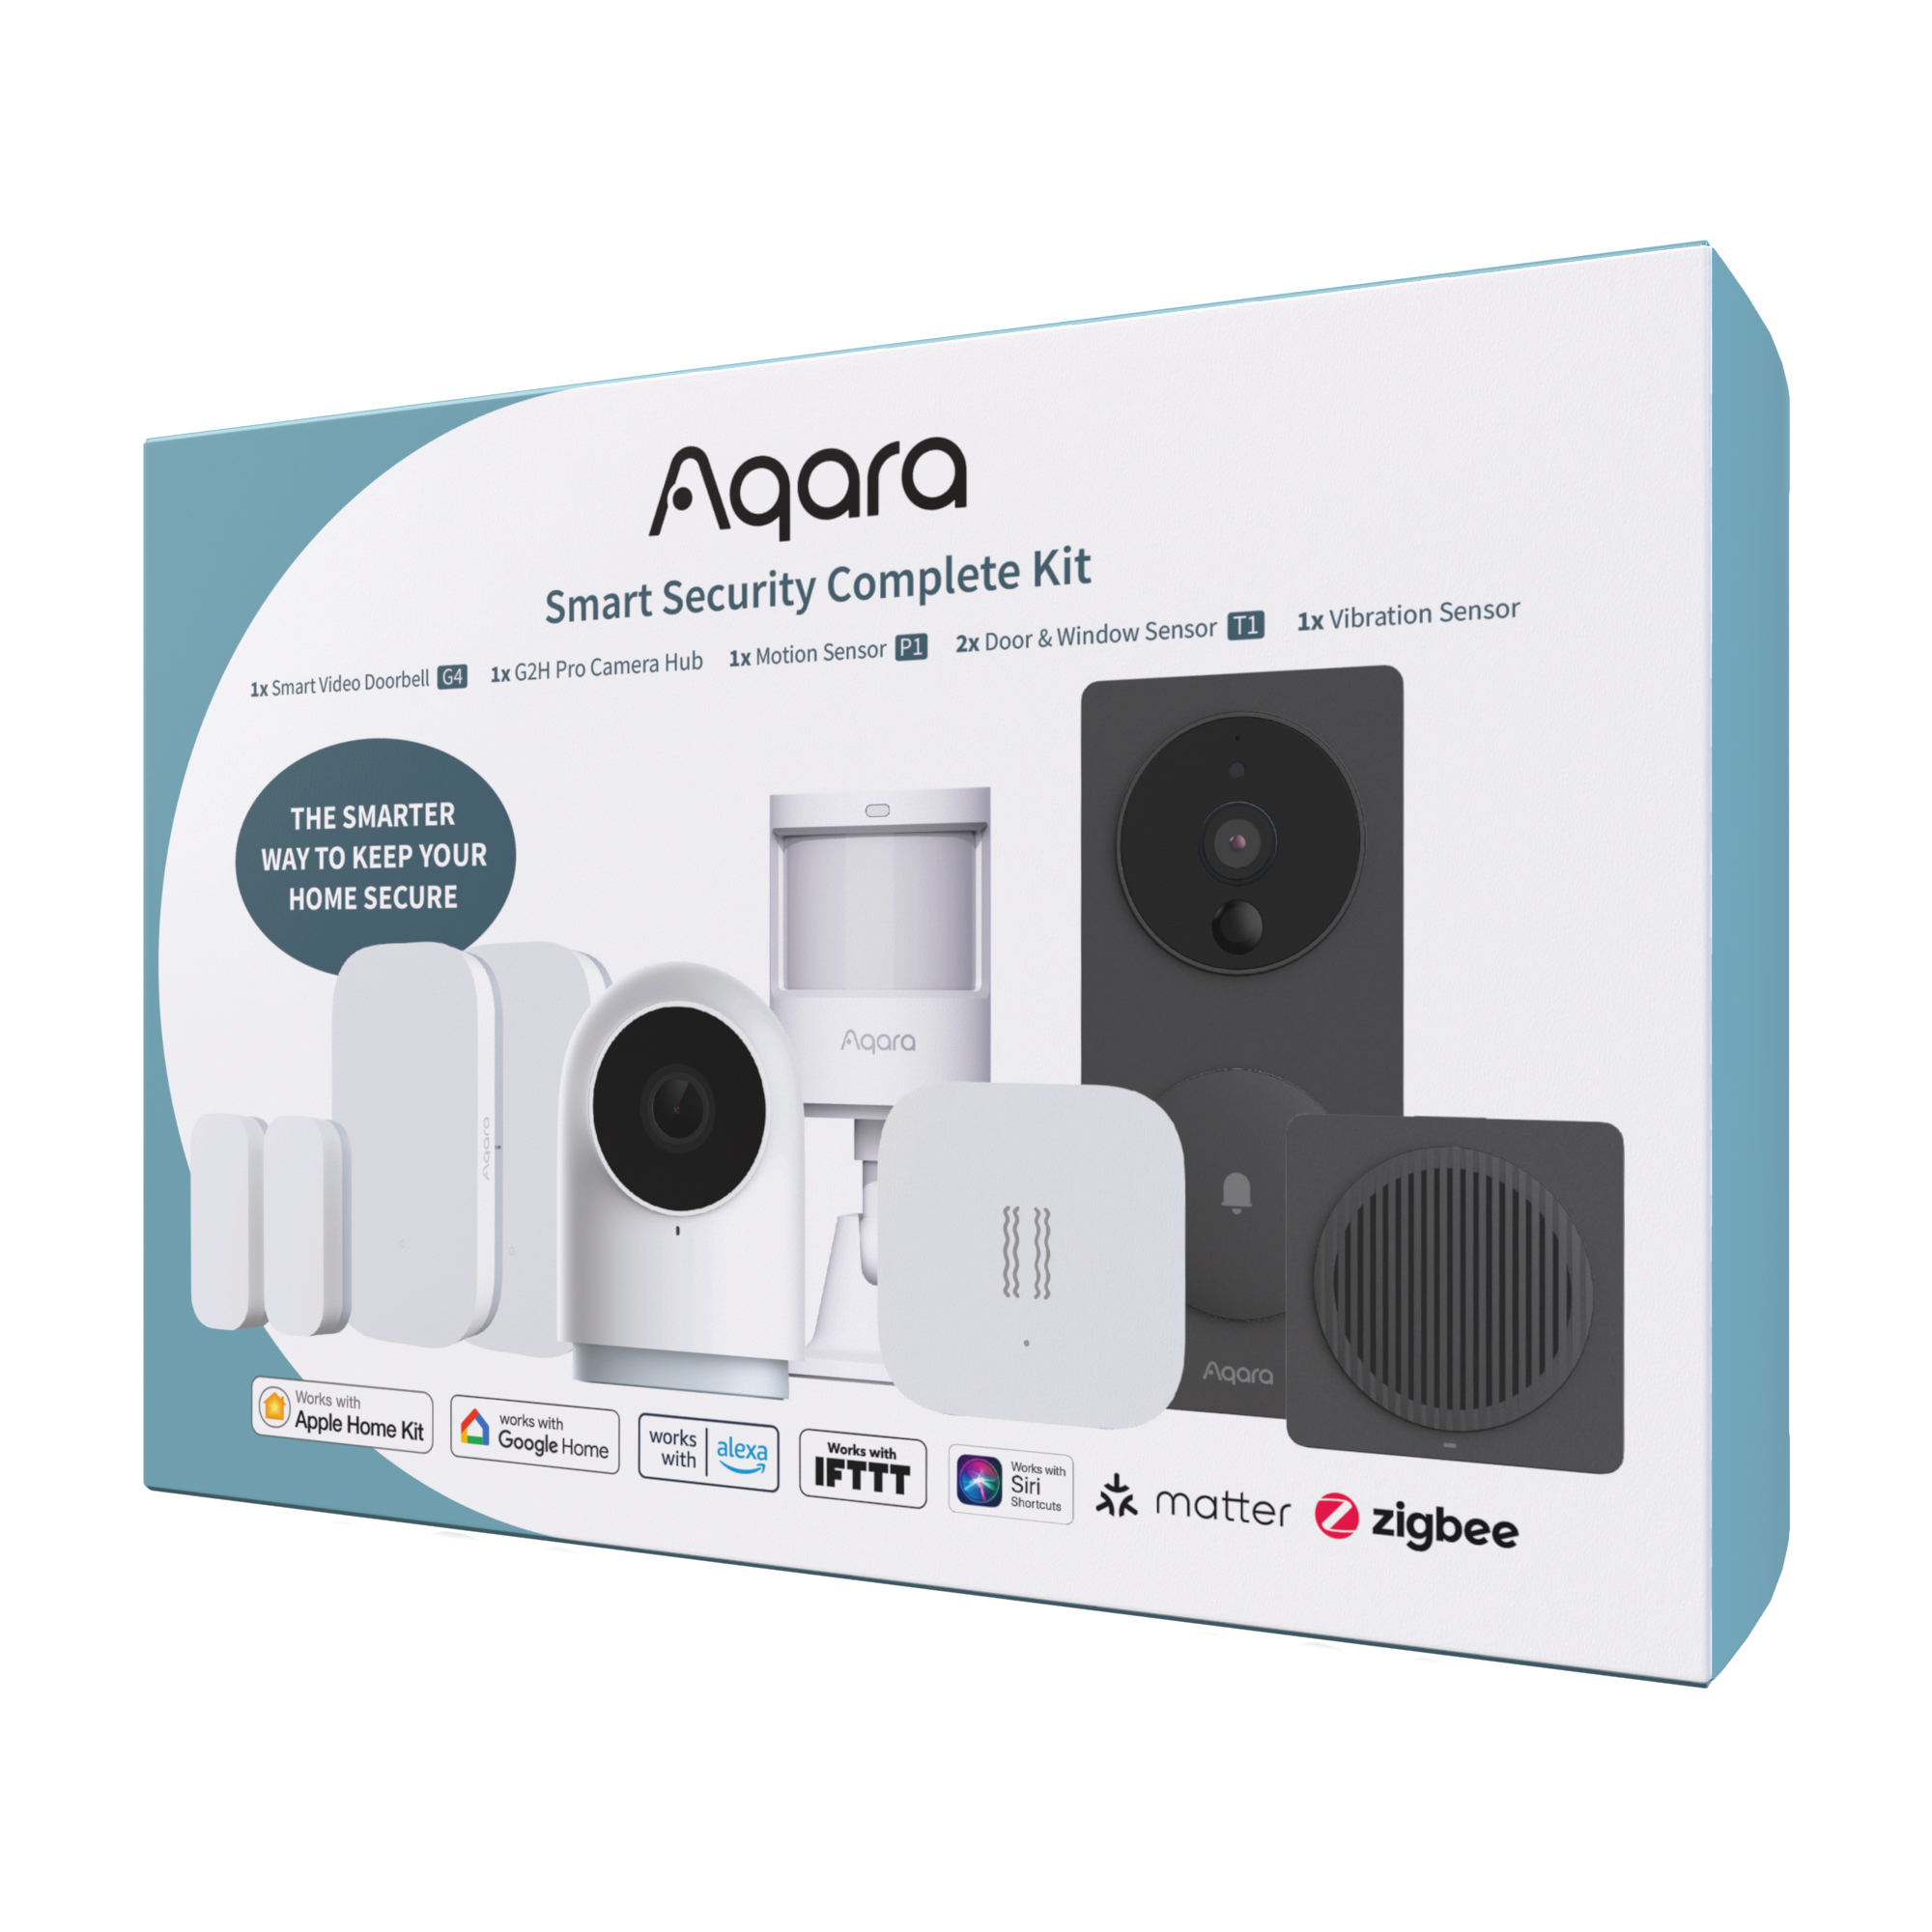 Aqara - Camera and Zigbee 3.0 Smarthome Gateway Aqara G2H PRO